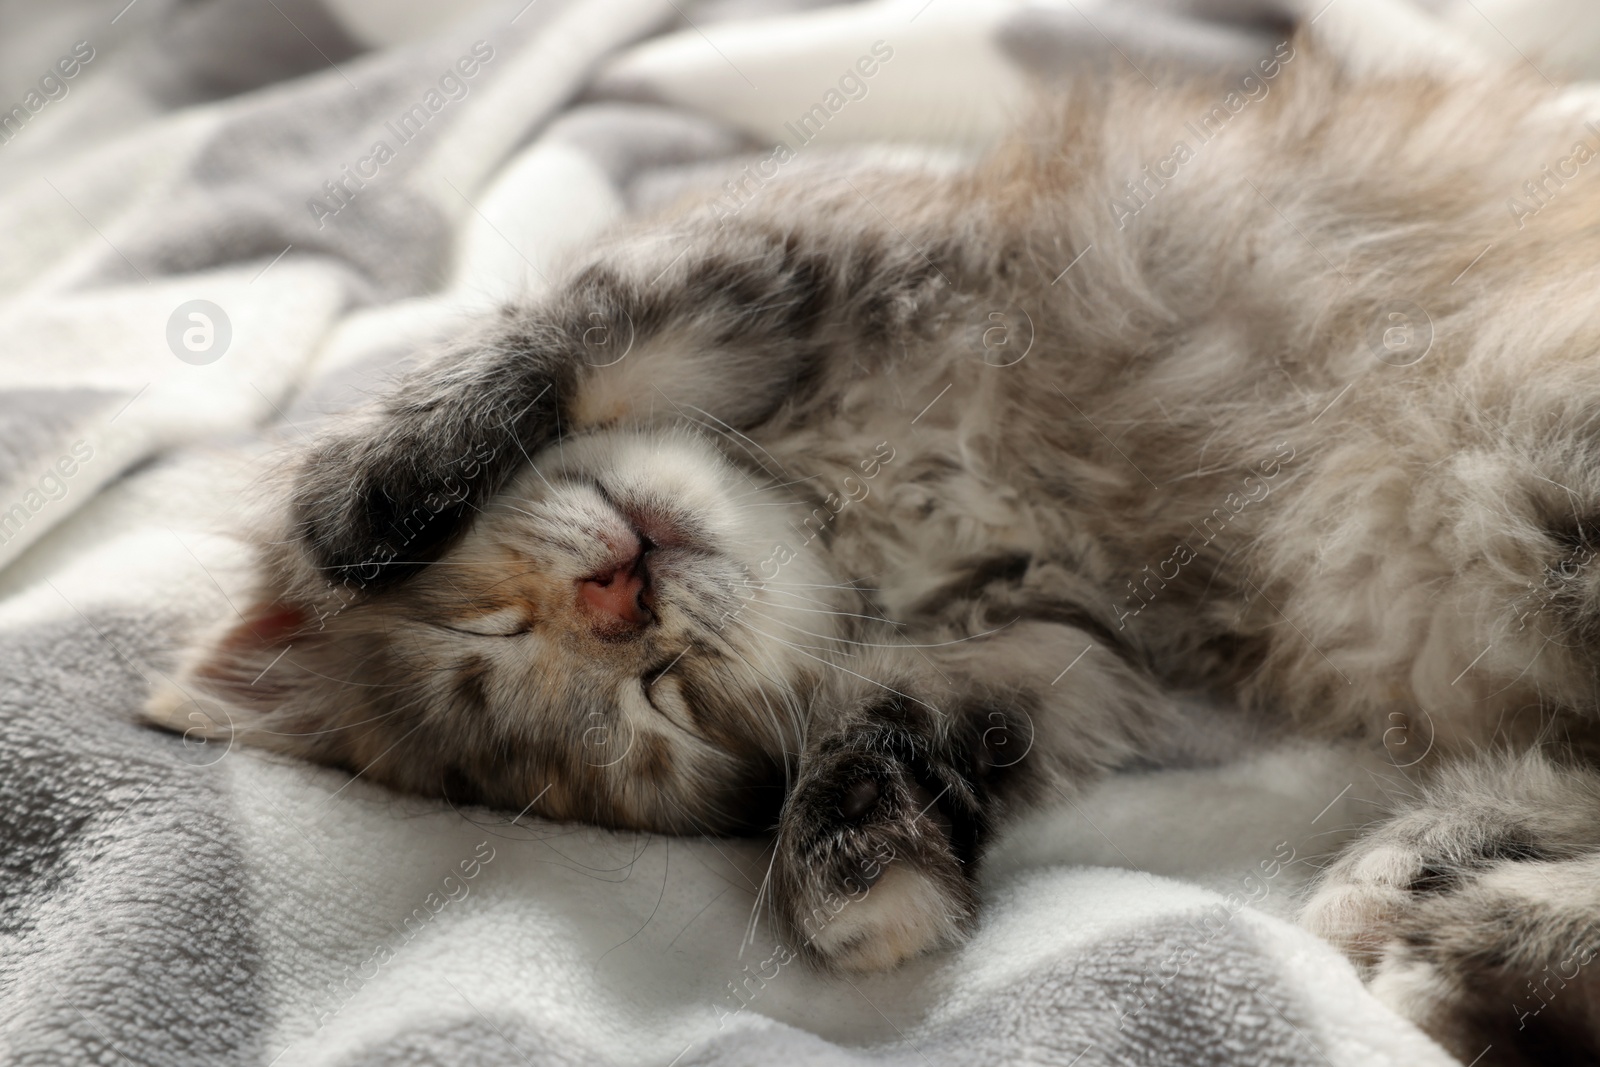 Photo of Cute kitten sleeping on soft blanket. Baby animal